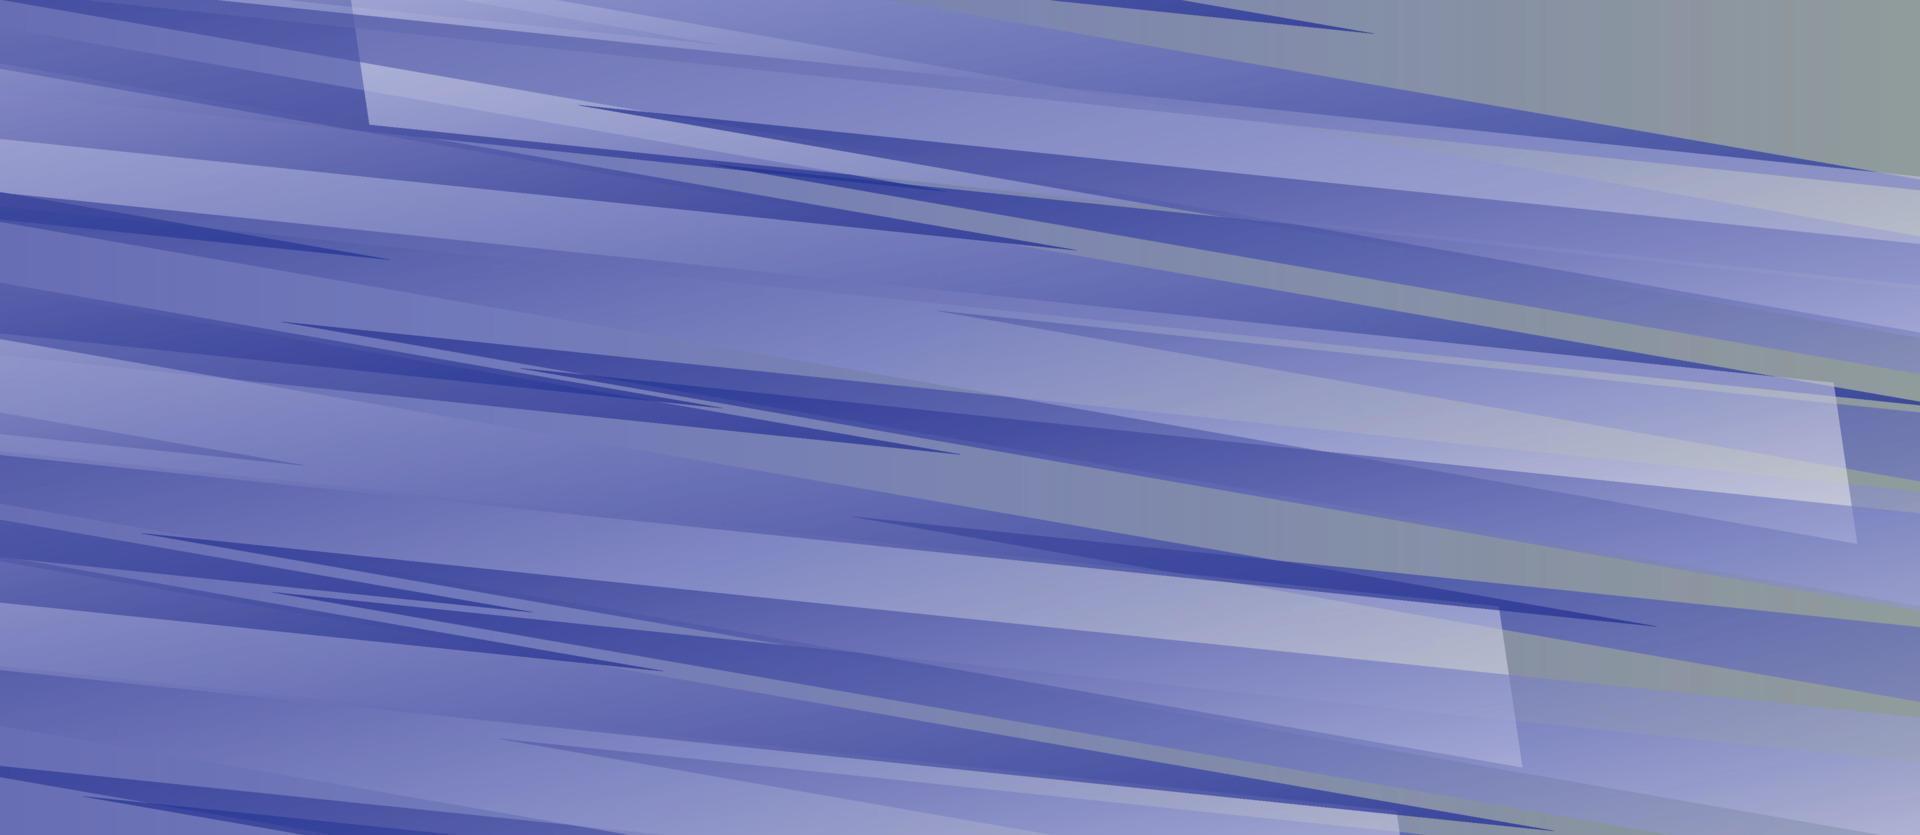 abstrakt blå färgrik bakgrund. vektor abstrakt grafisk design